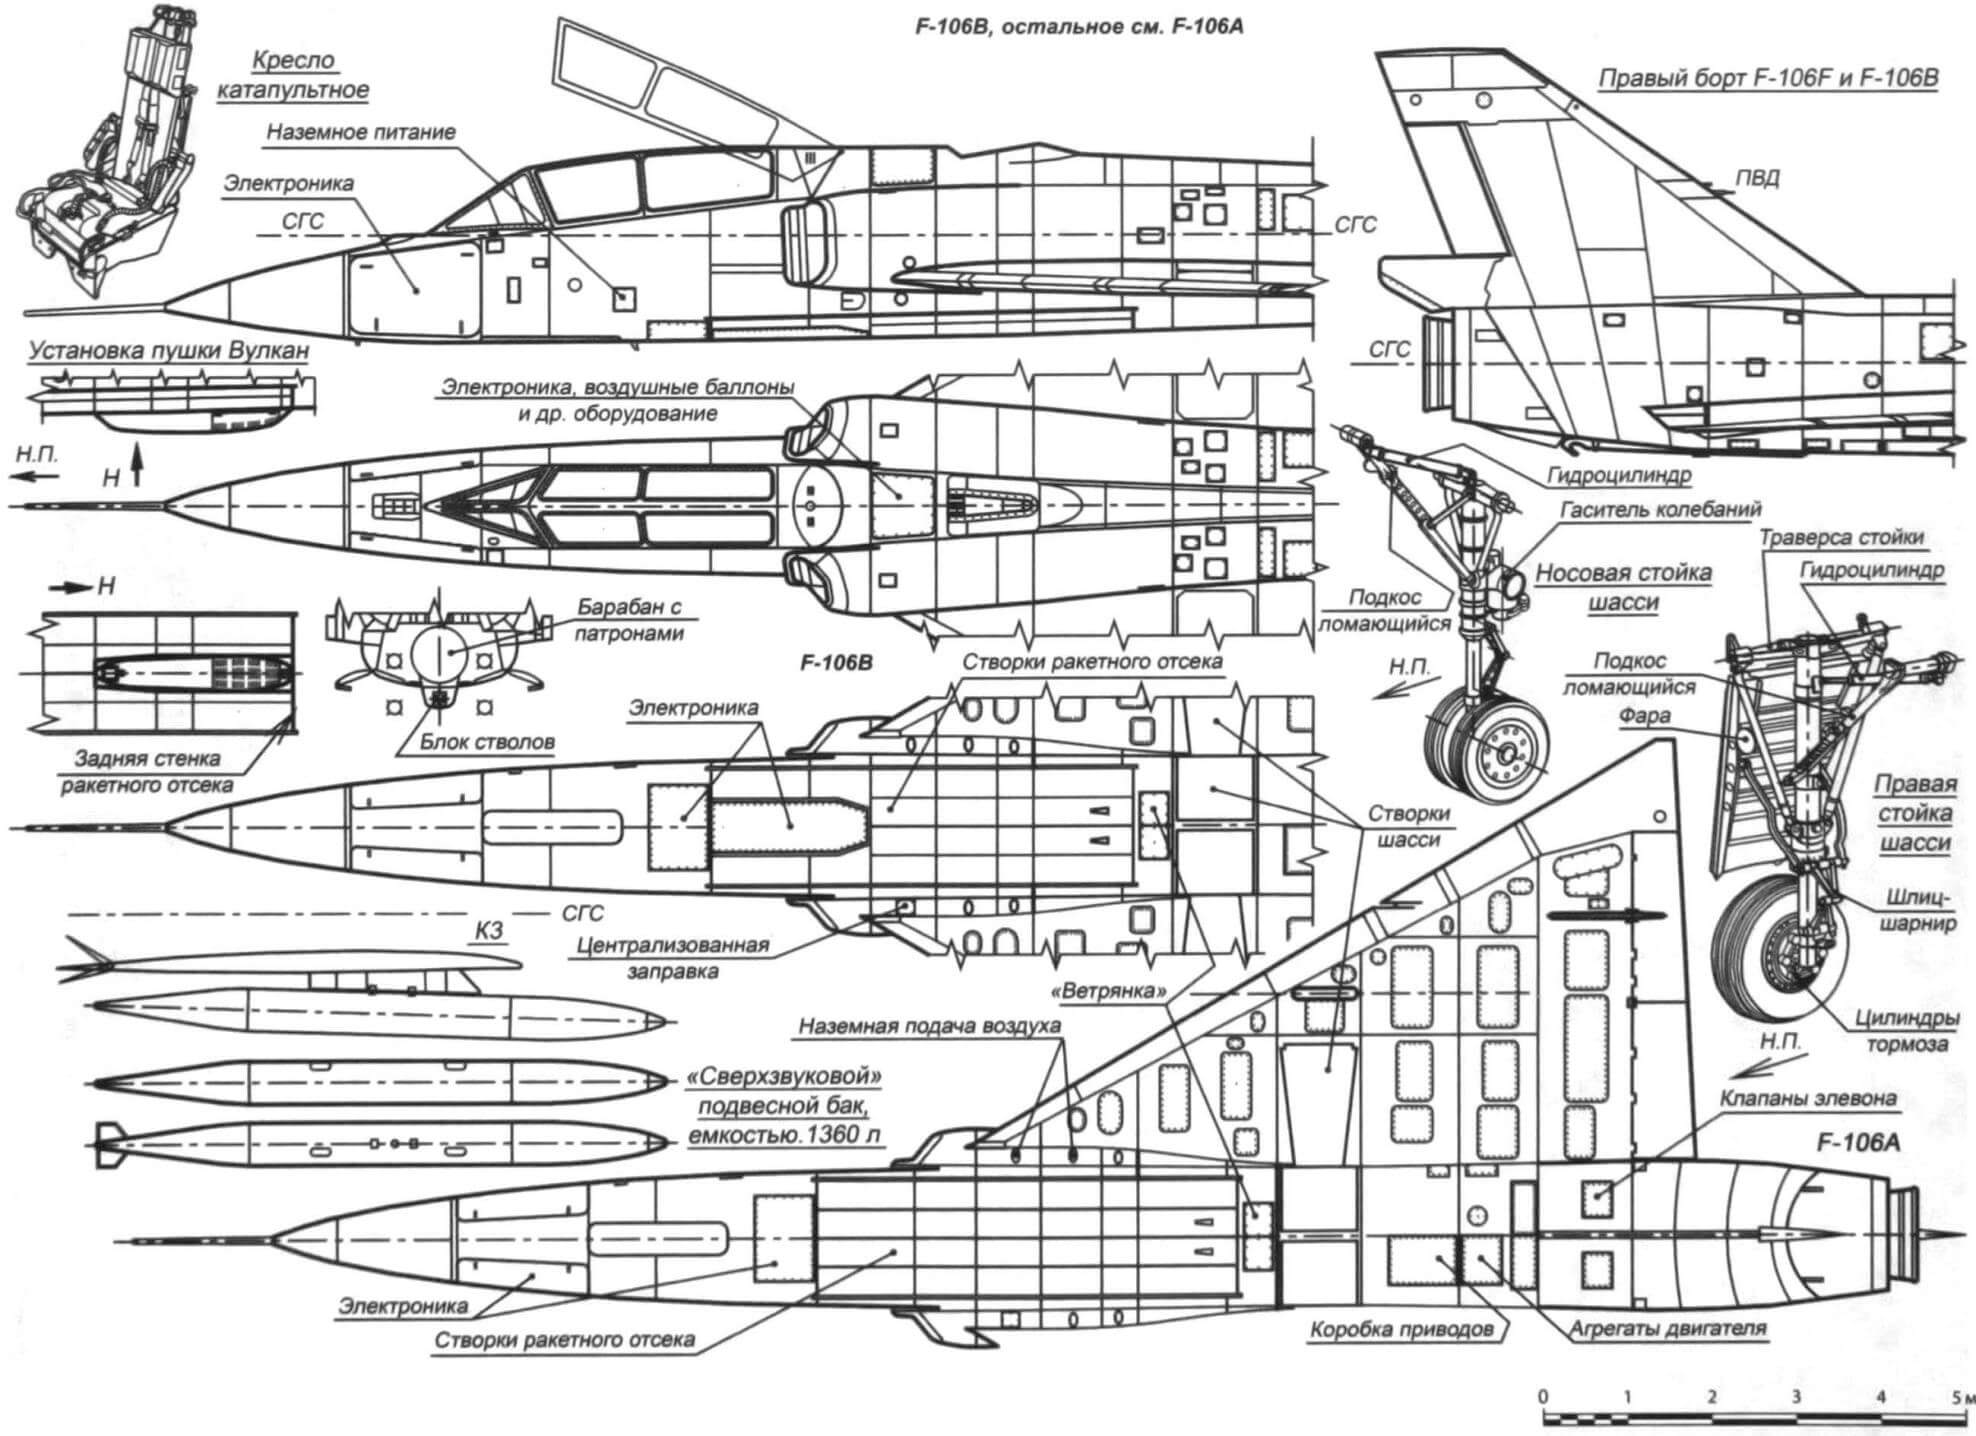 ПЕРЕХВАТЧИК F-106A «DELTA DART»